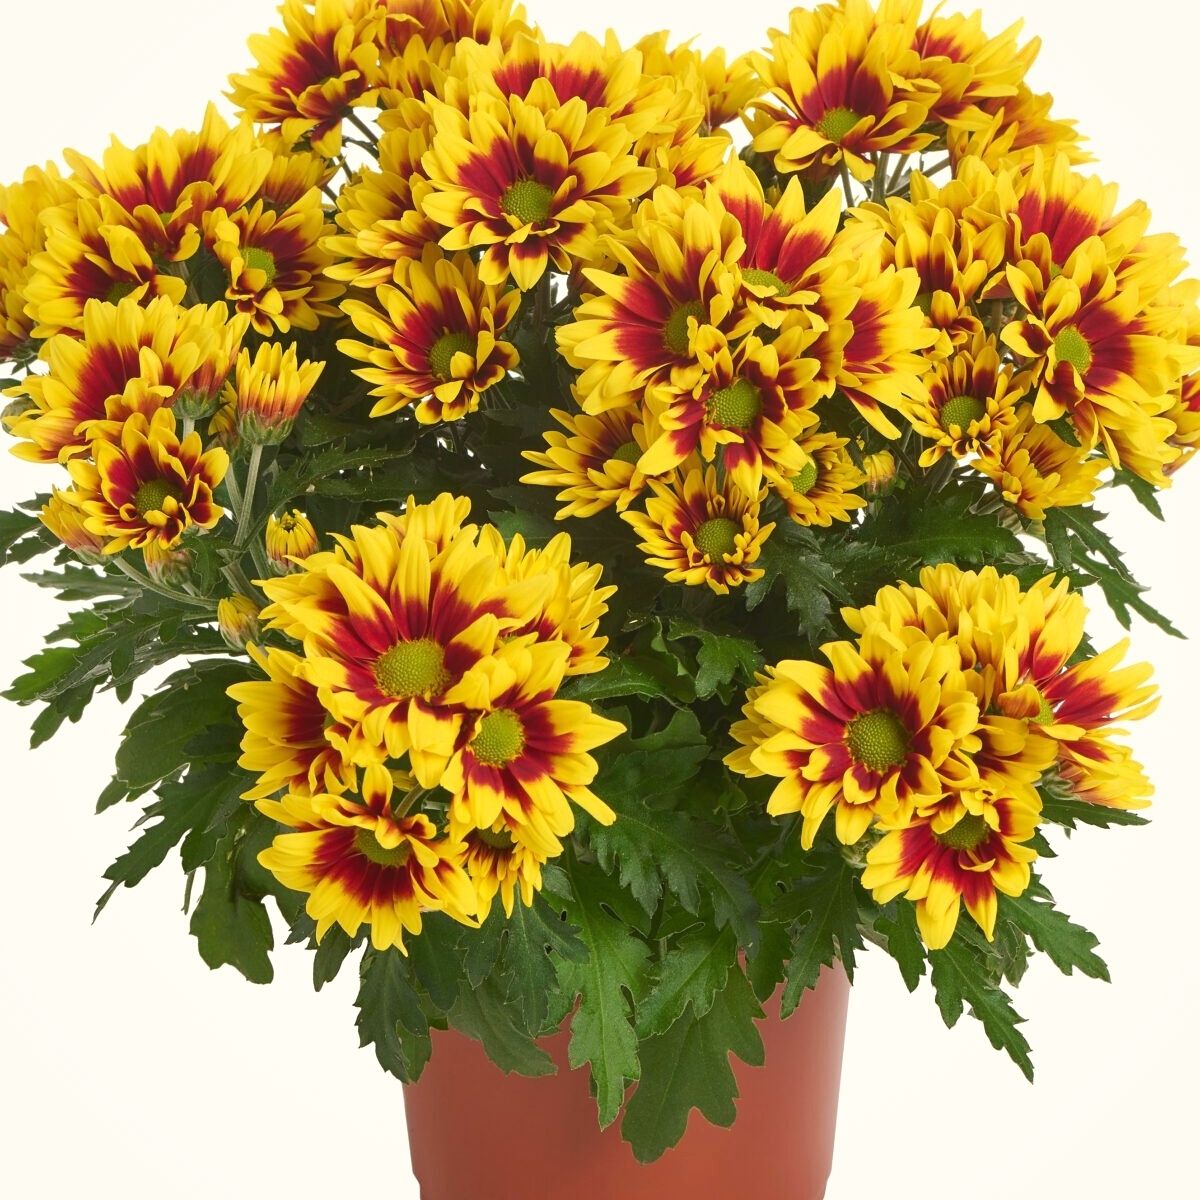 Ciao Splendid chrysanthemum by Royal Van Zanten on Thursd